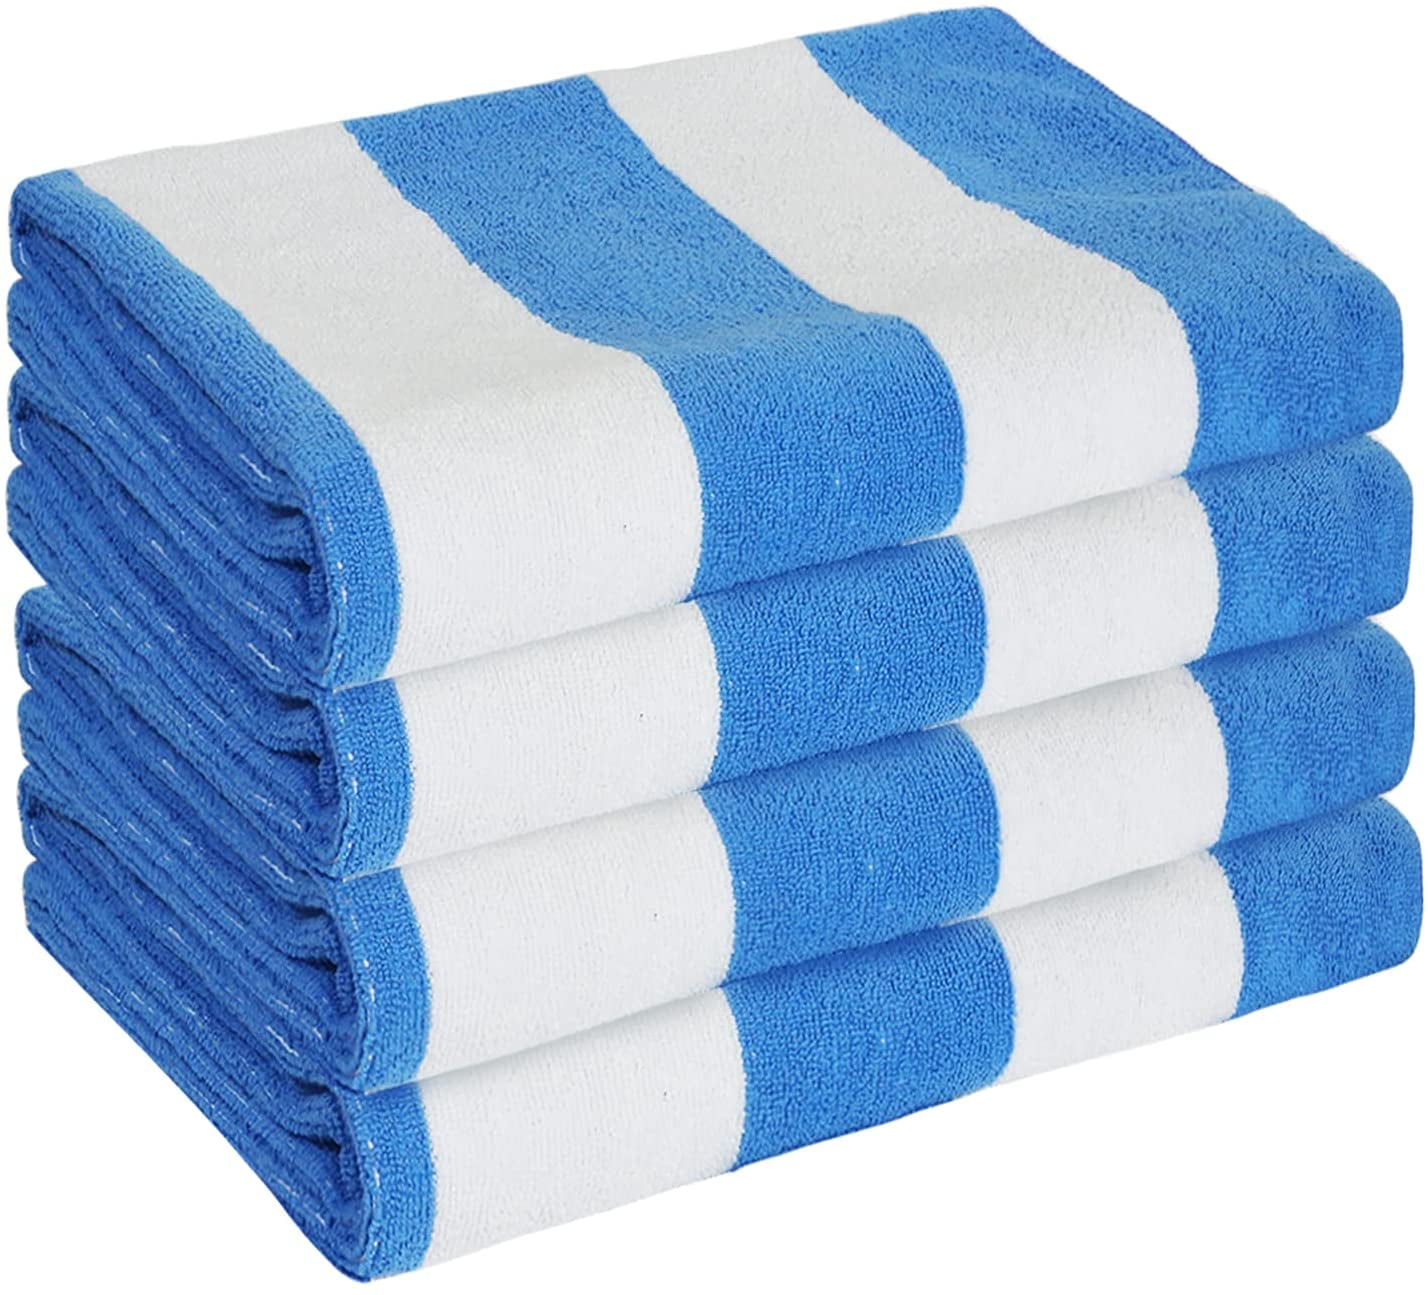 2 PCS Cabana Beach Towels 70 x 140CM Extra Large Striped Coral Velvet Bath Towel 